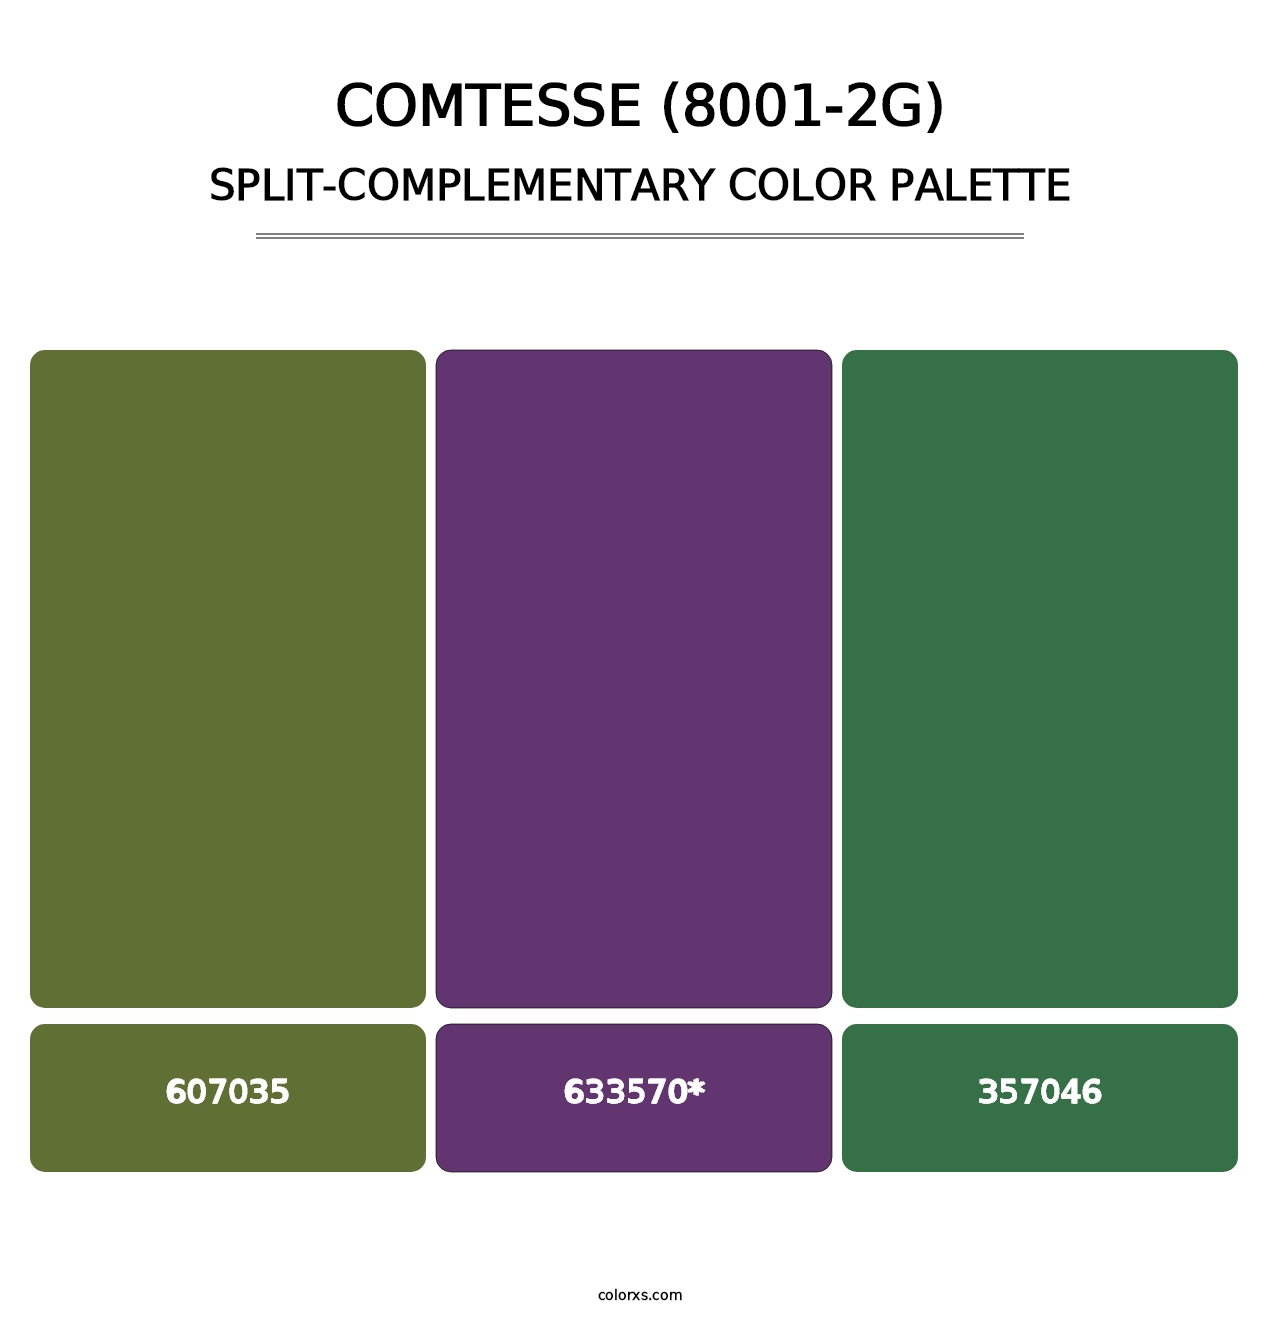 Comtesse (8001-2G) - Split-Complementary Color Palette